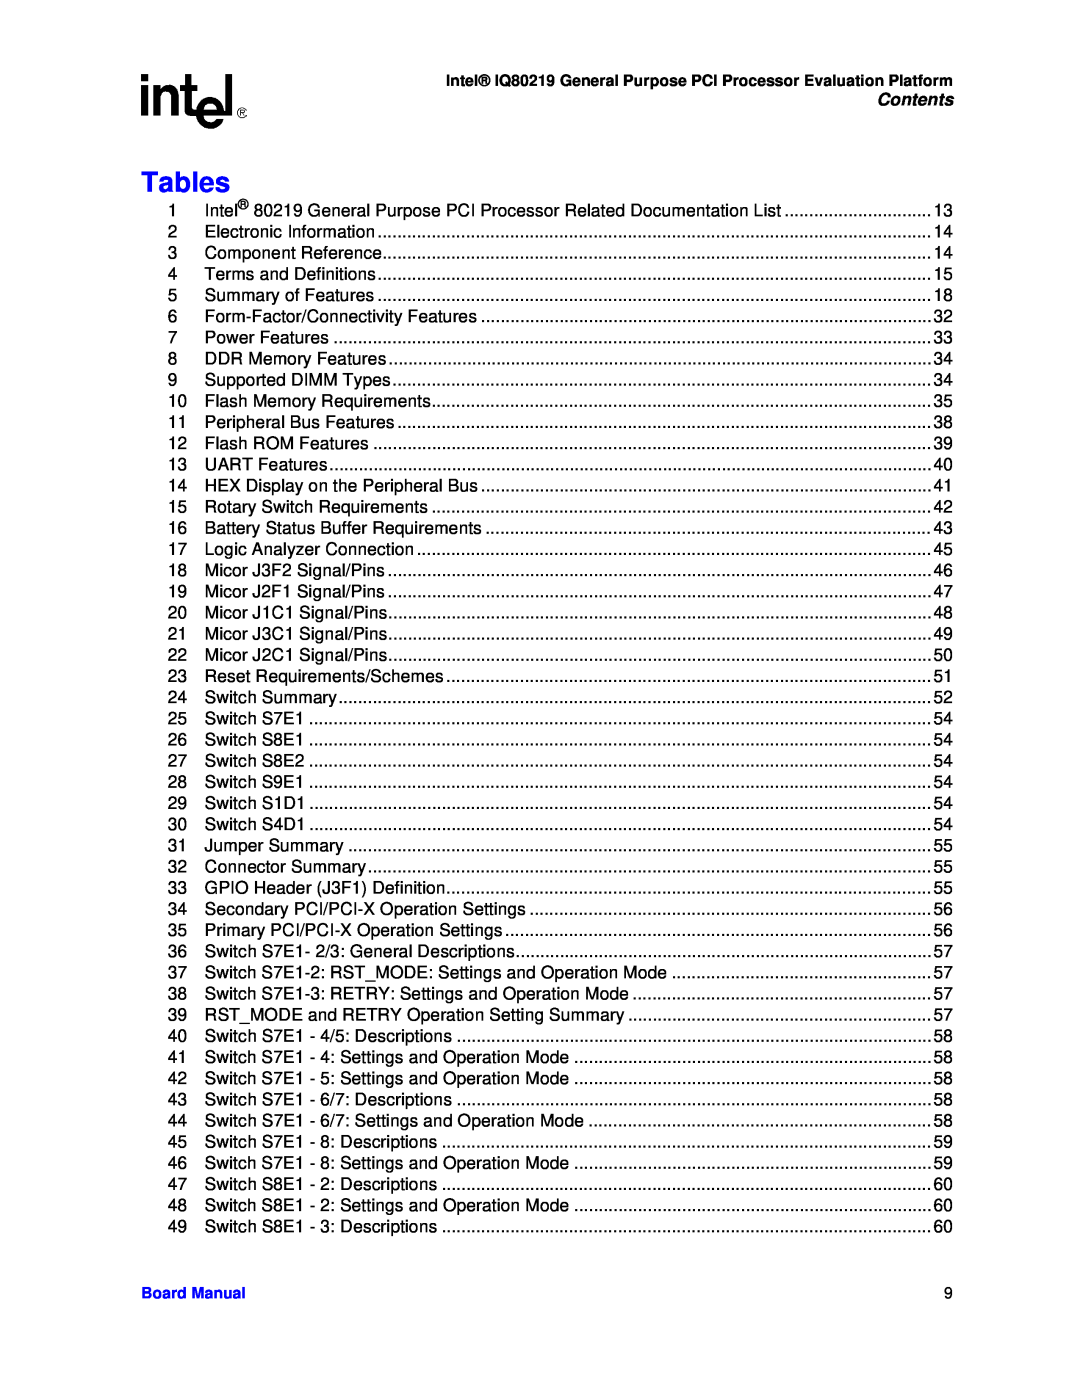 Intel IQ80219 manual Tables, Contents, Intel 80219 General Purpose PCI Processor Related Documentation List, Board Manual 